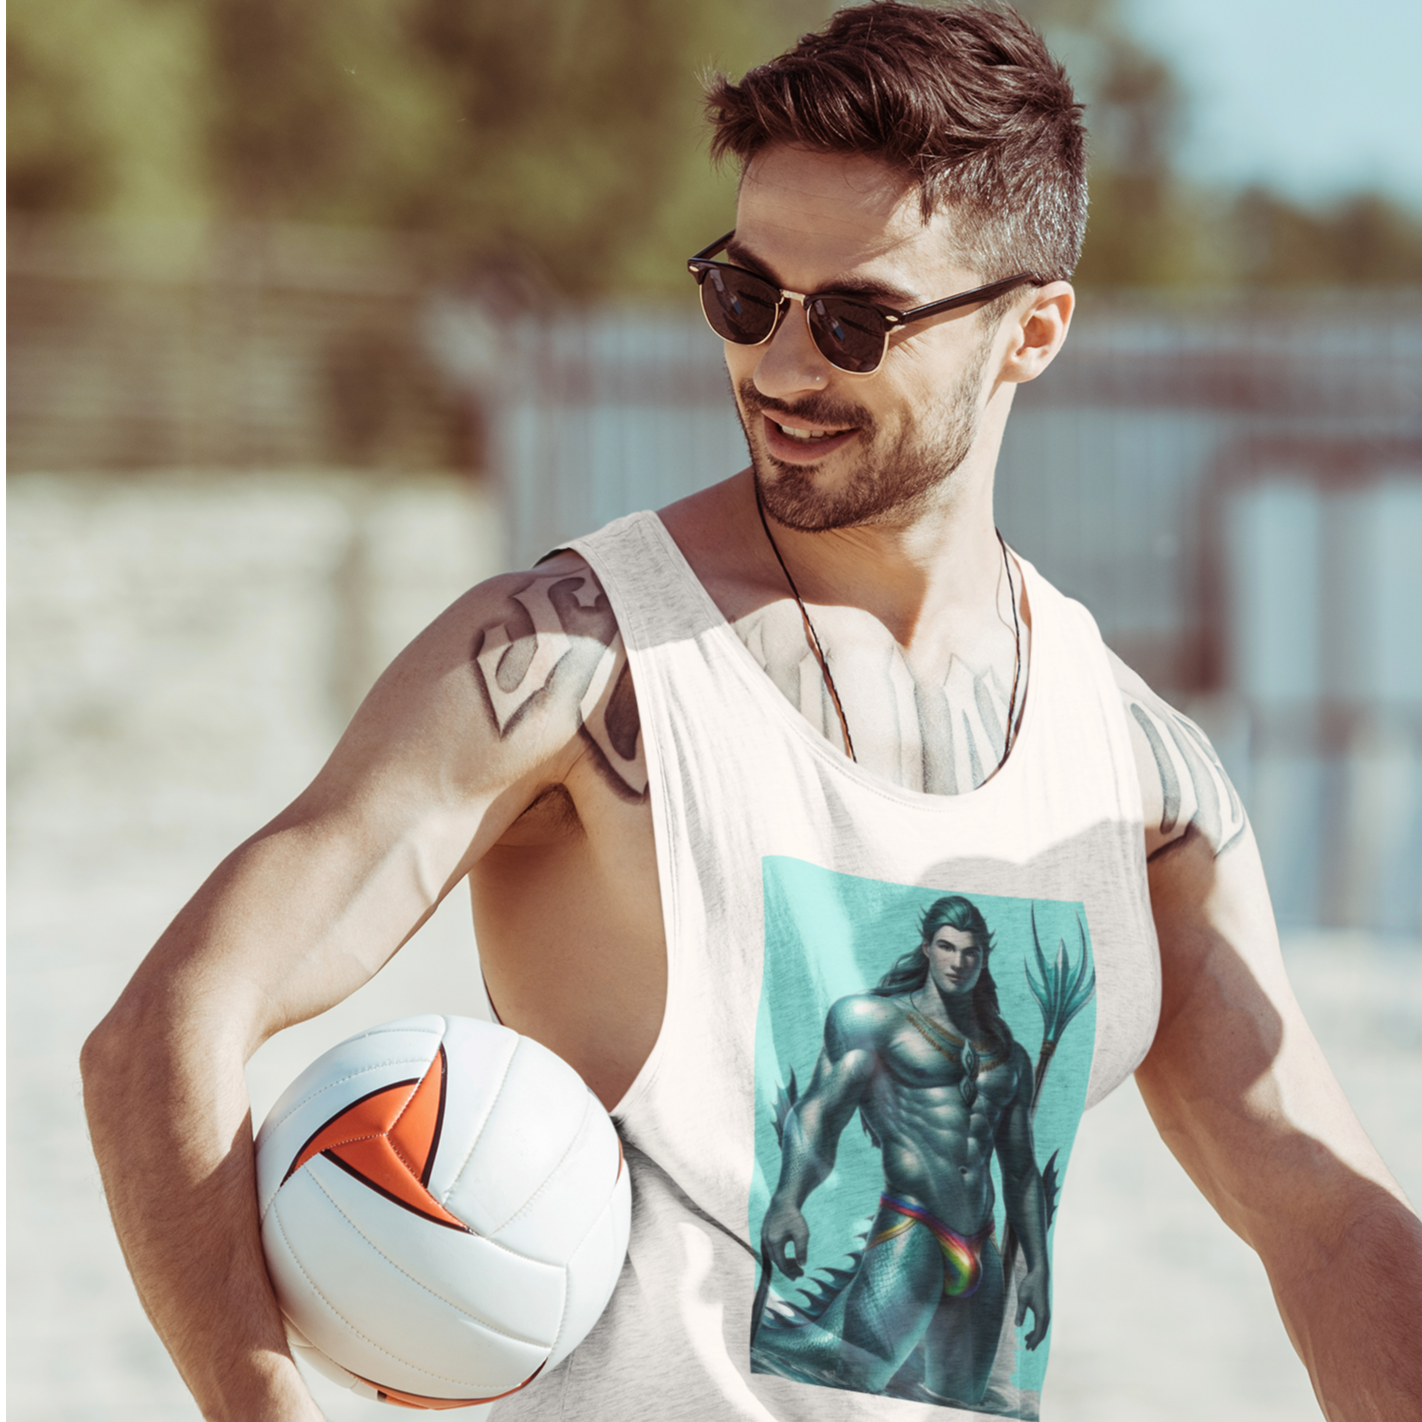 gay aqua merman sea creature tank top worn by gay guy playing volleyball at the beach